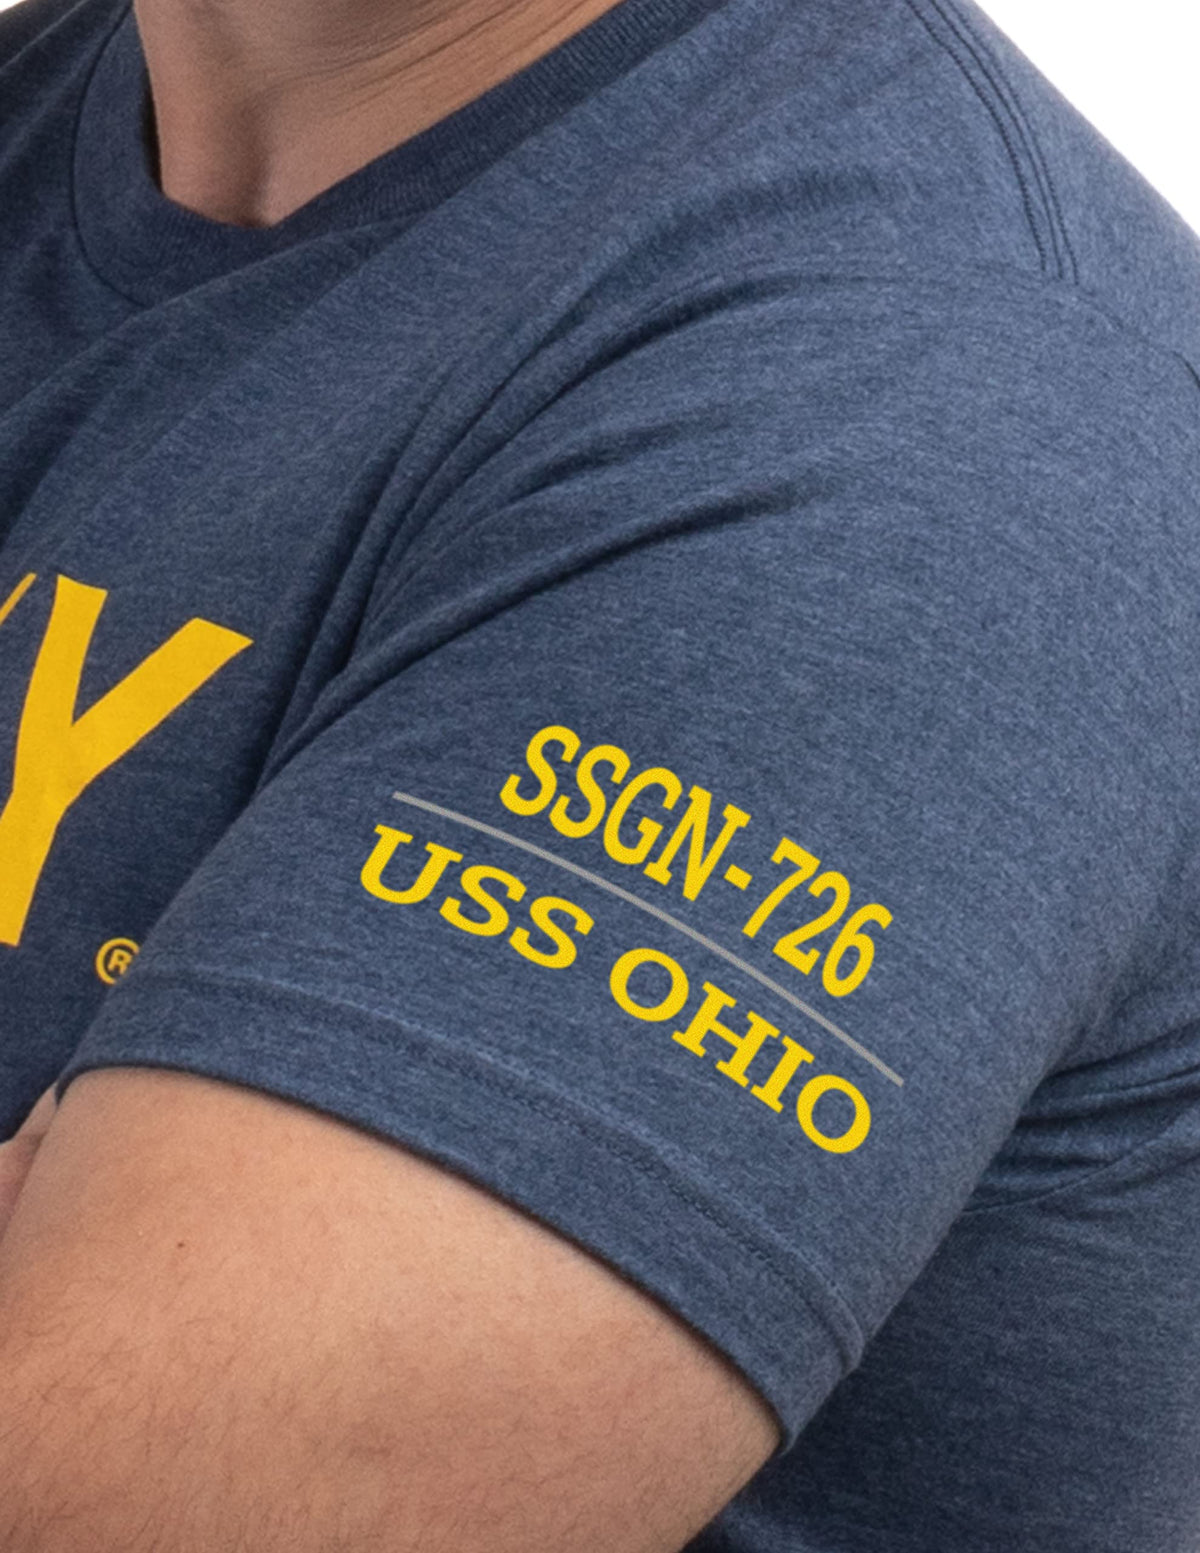 USS Ohio, SSGN-726 | U.S. Navy Sailor Veteran USN United States Naval T-shirt for Men Women